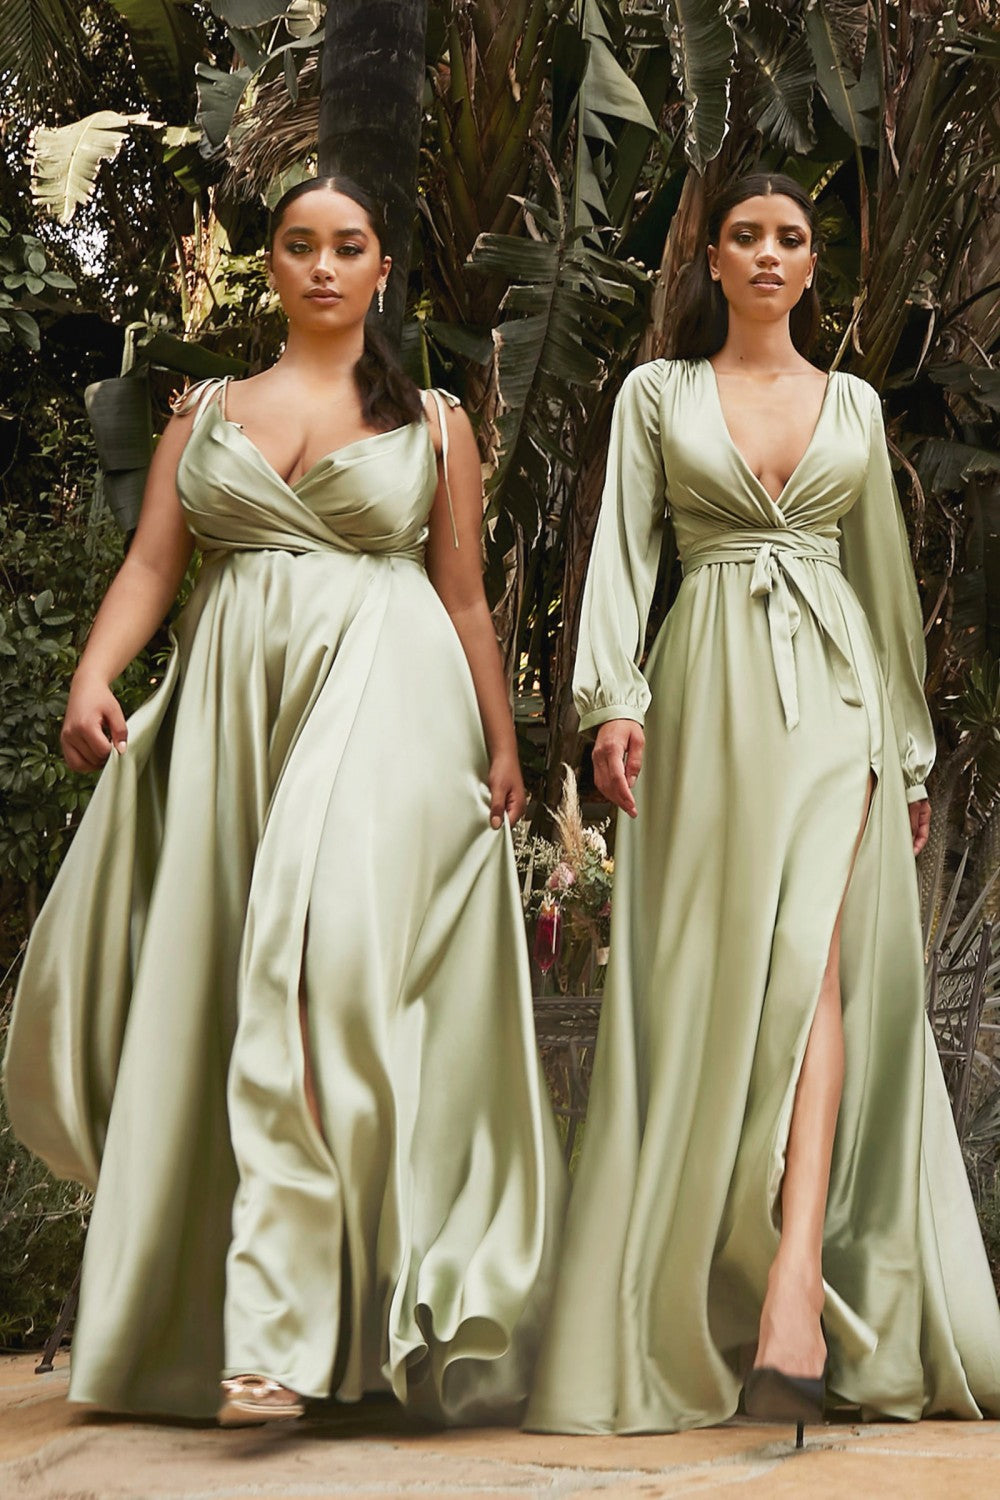 Porto One Shoulder Bridesmaids Dress in Olive Green Satin